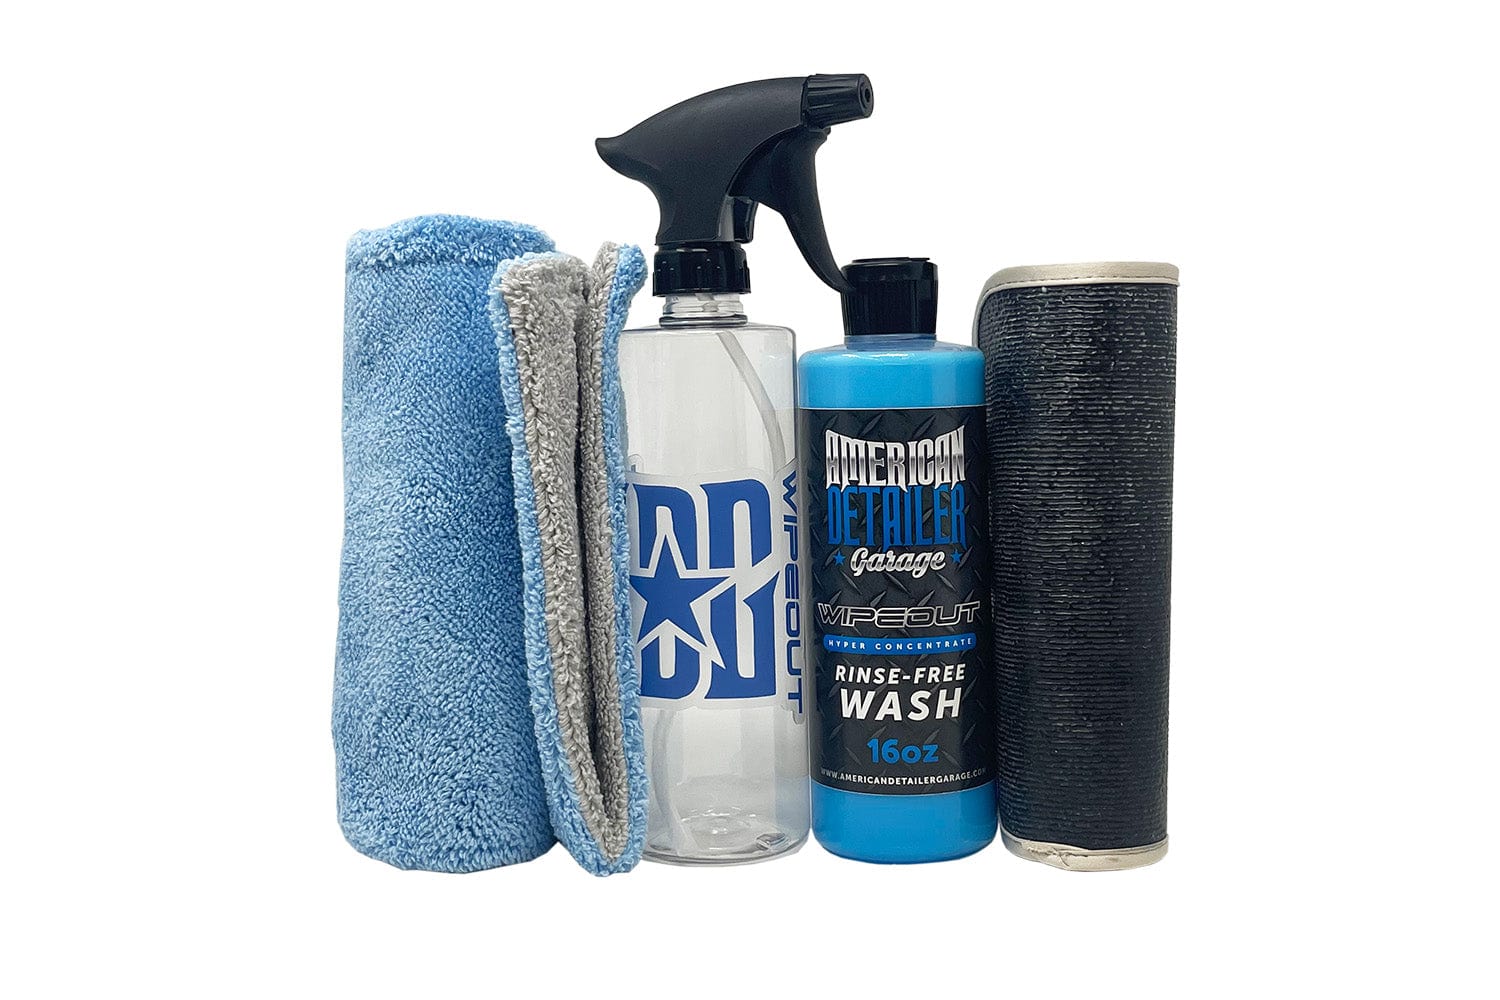 1-10Pack Microfiber Clay Bar Towel Car Detailing Cleaning Washing